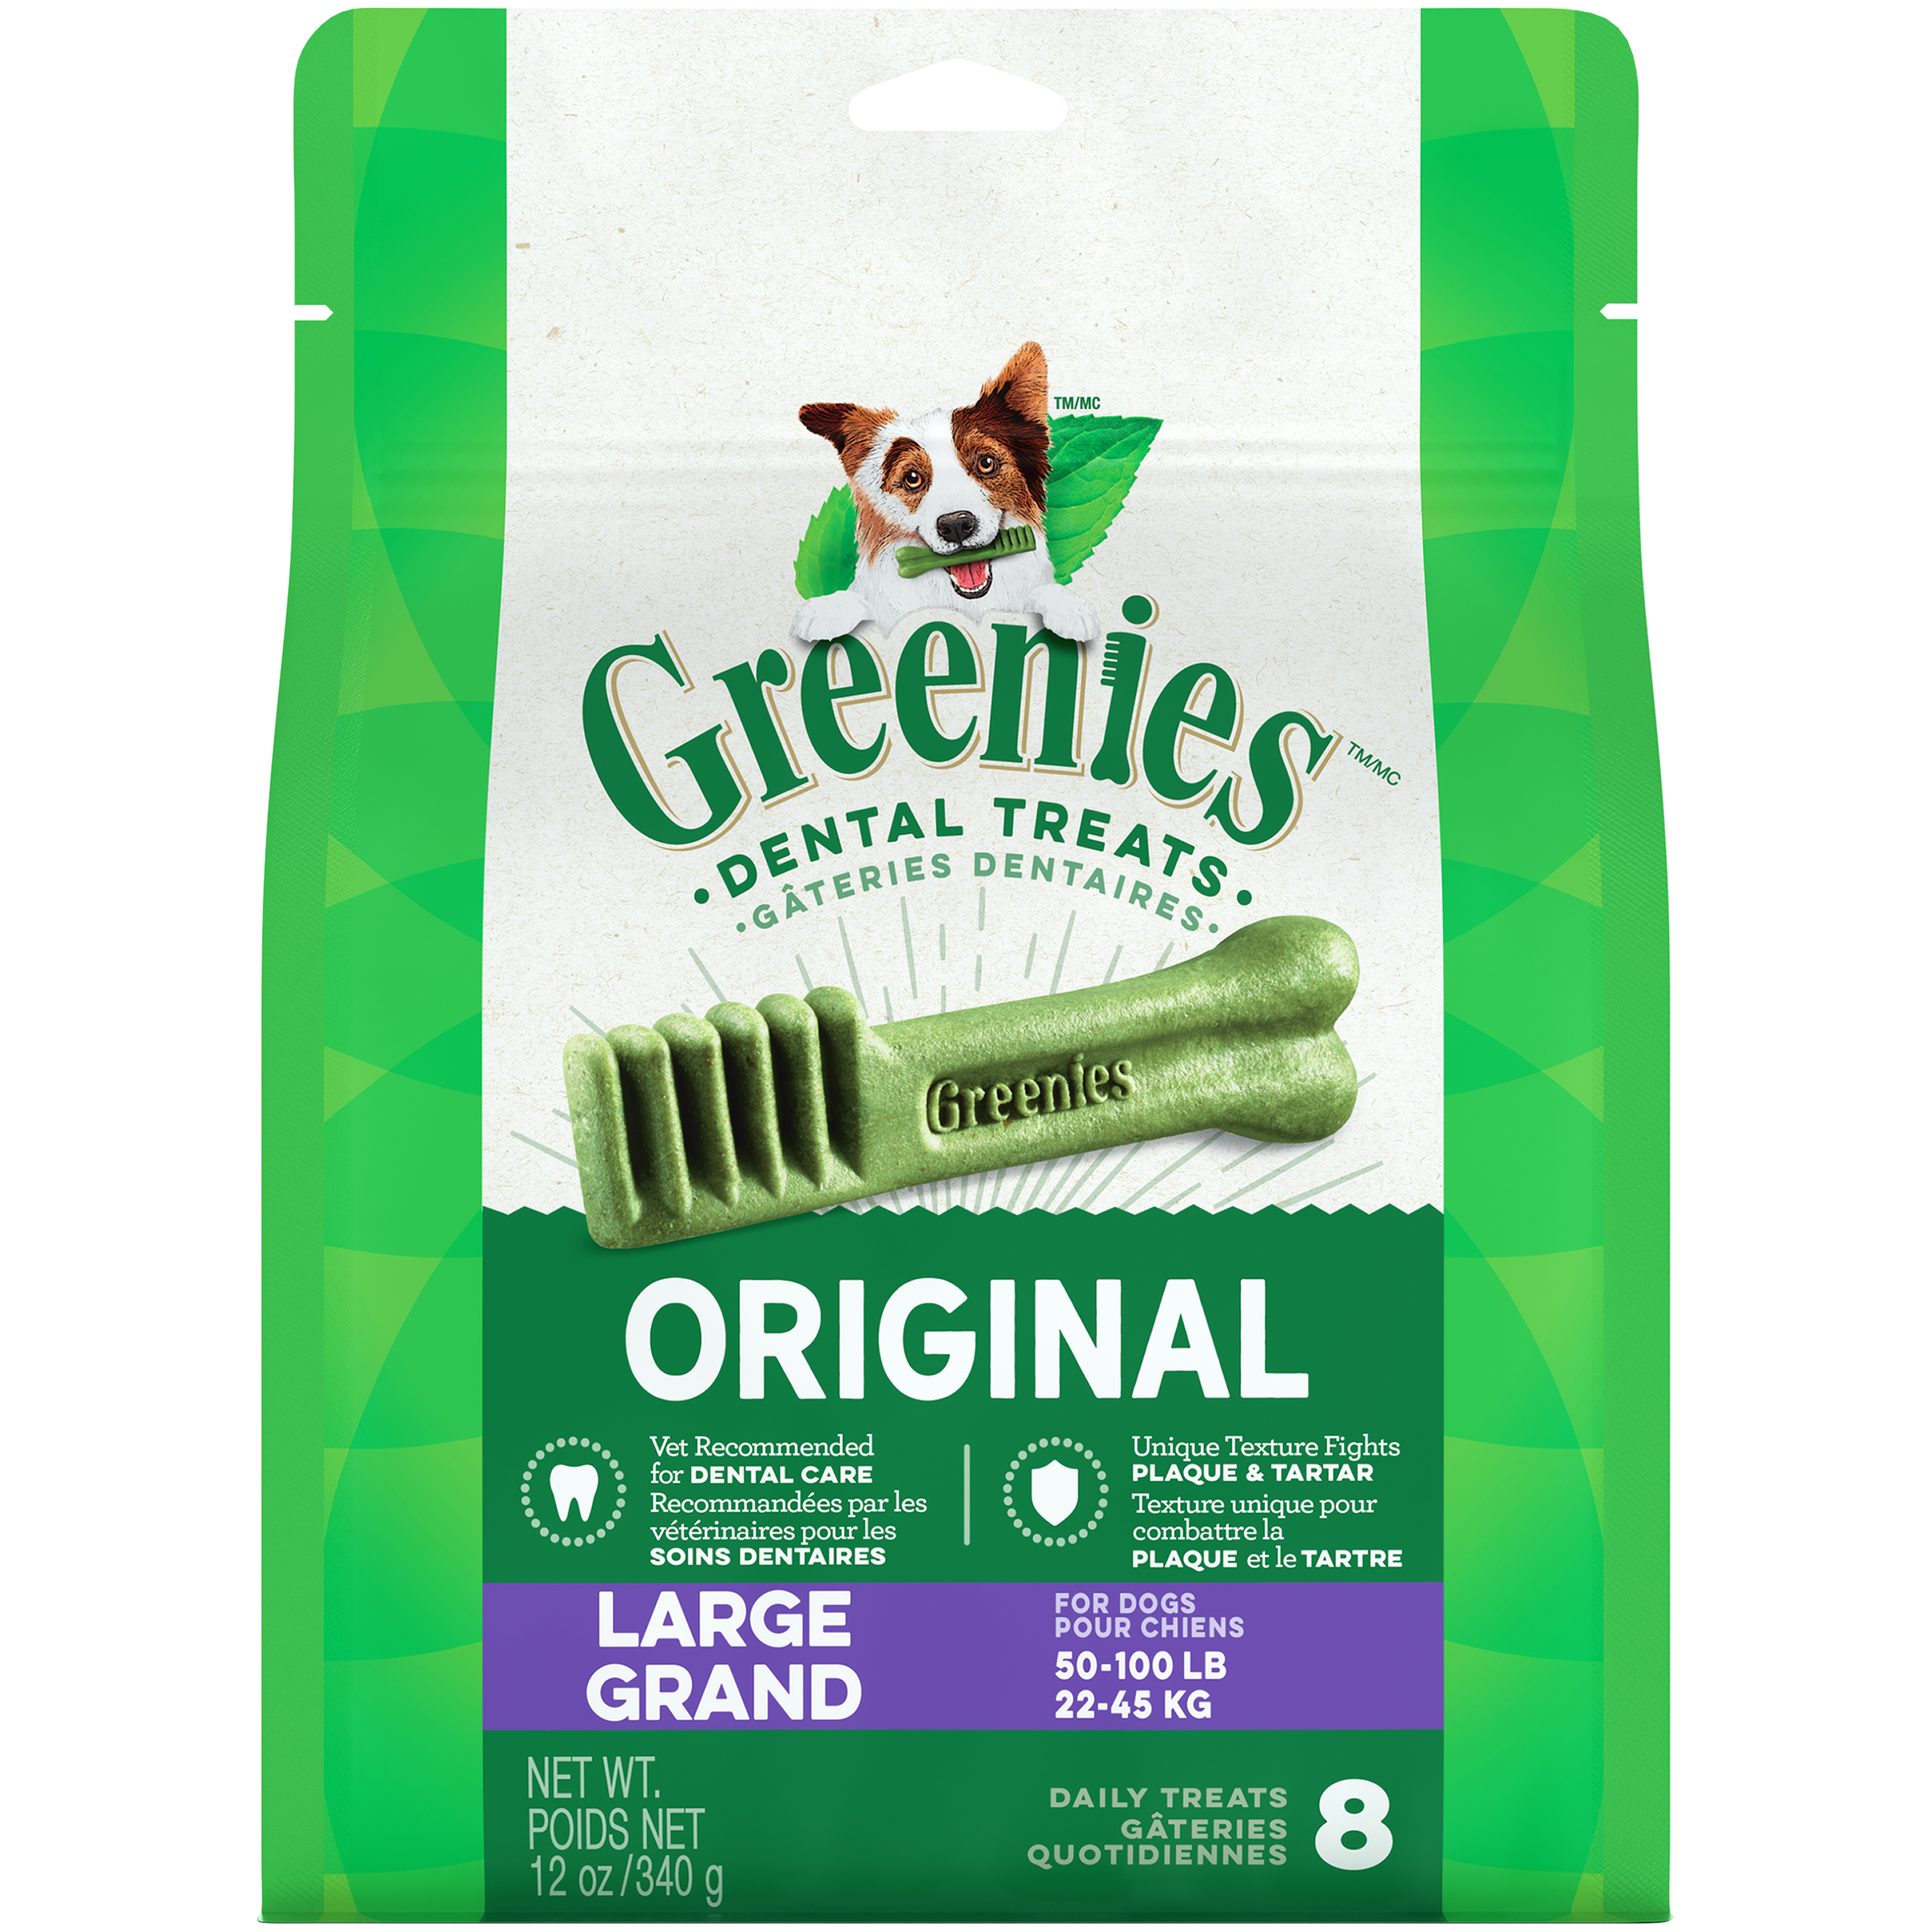 Greenies Dental Treats Original Large Dog Treats 12 oz. Bag